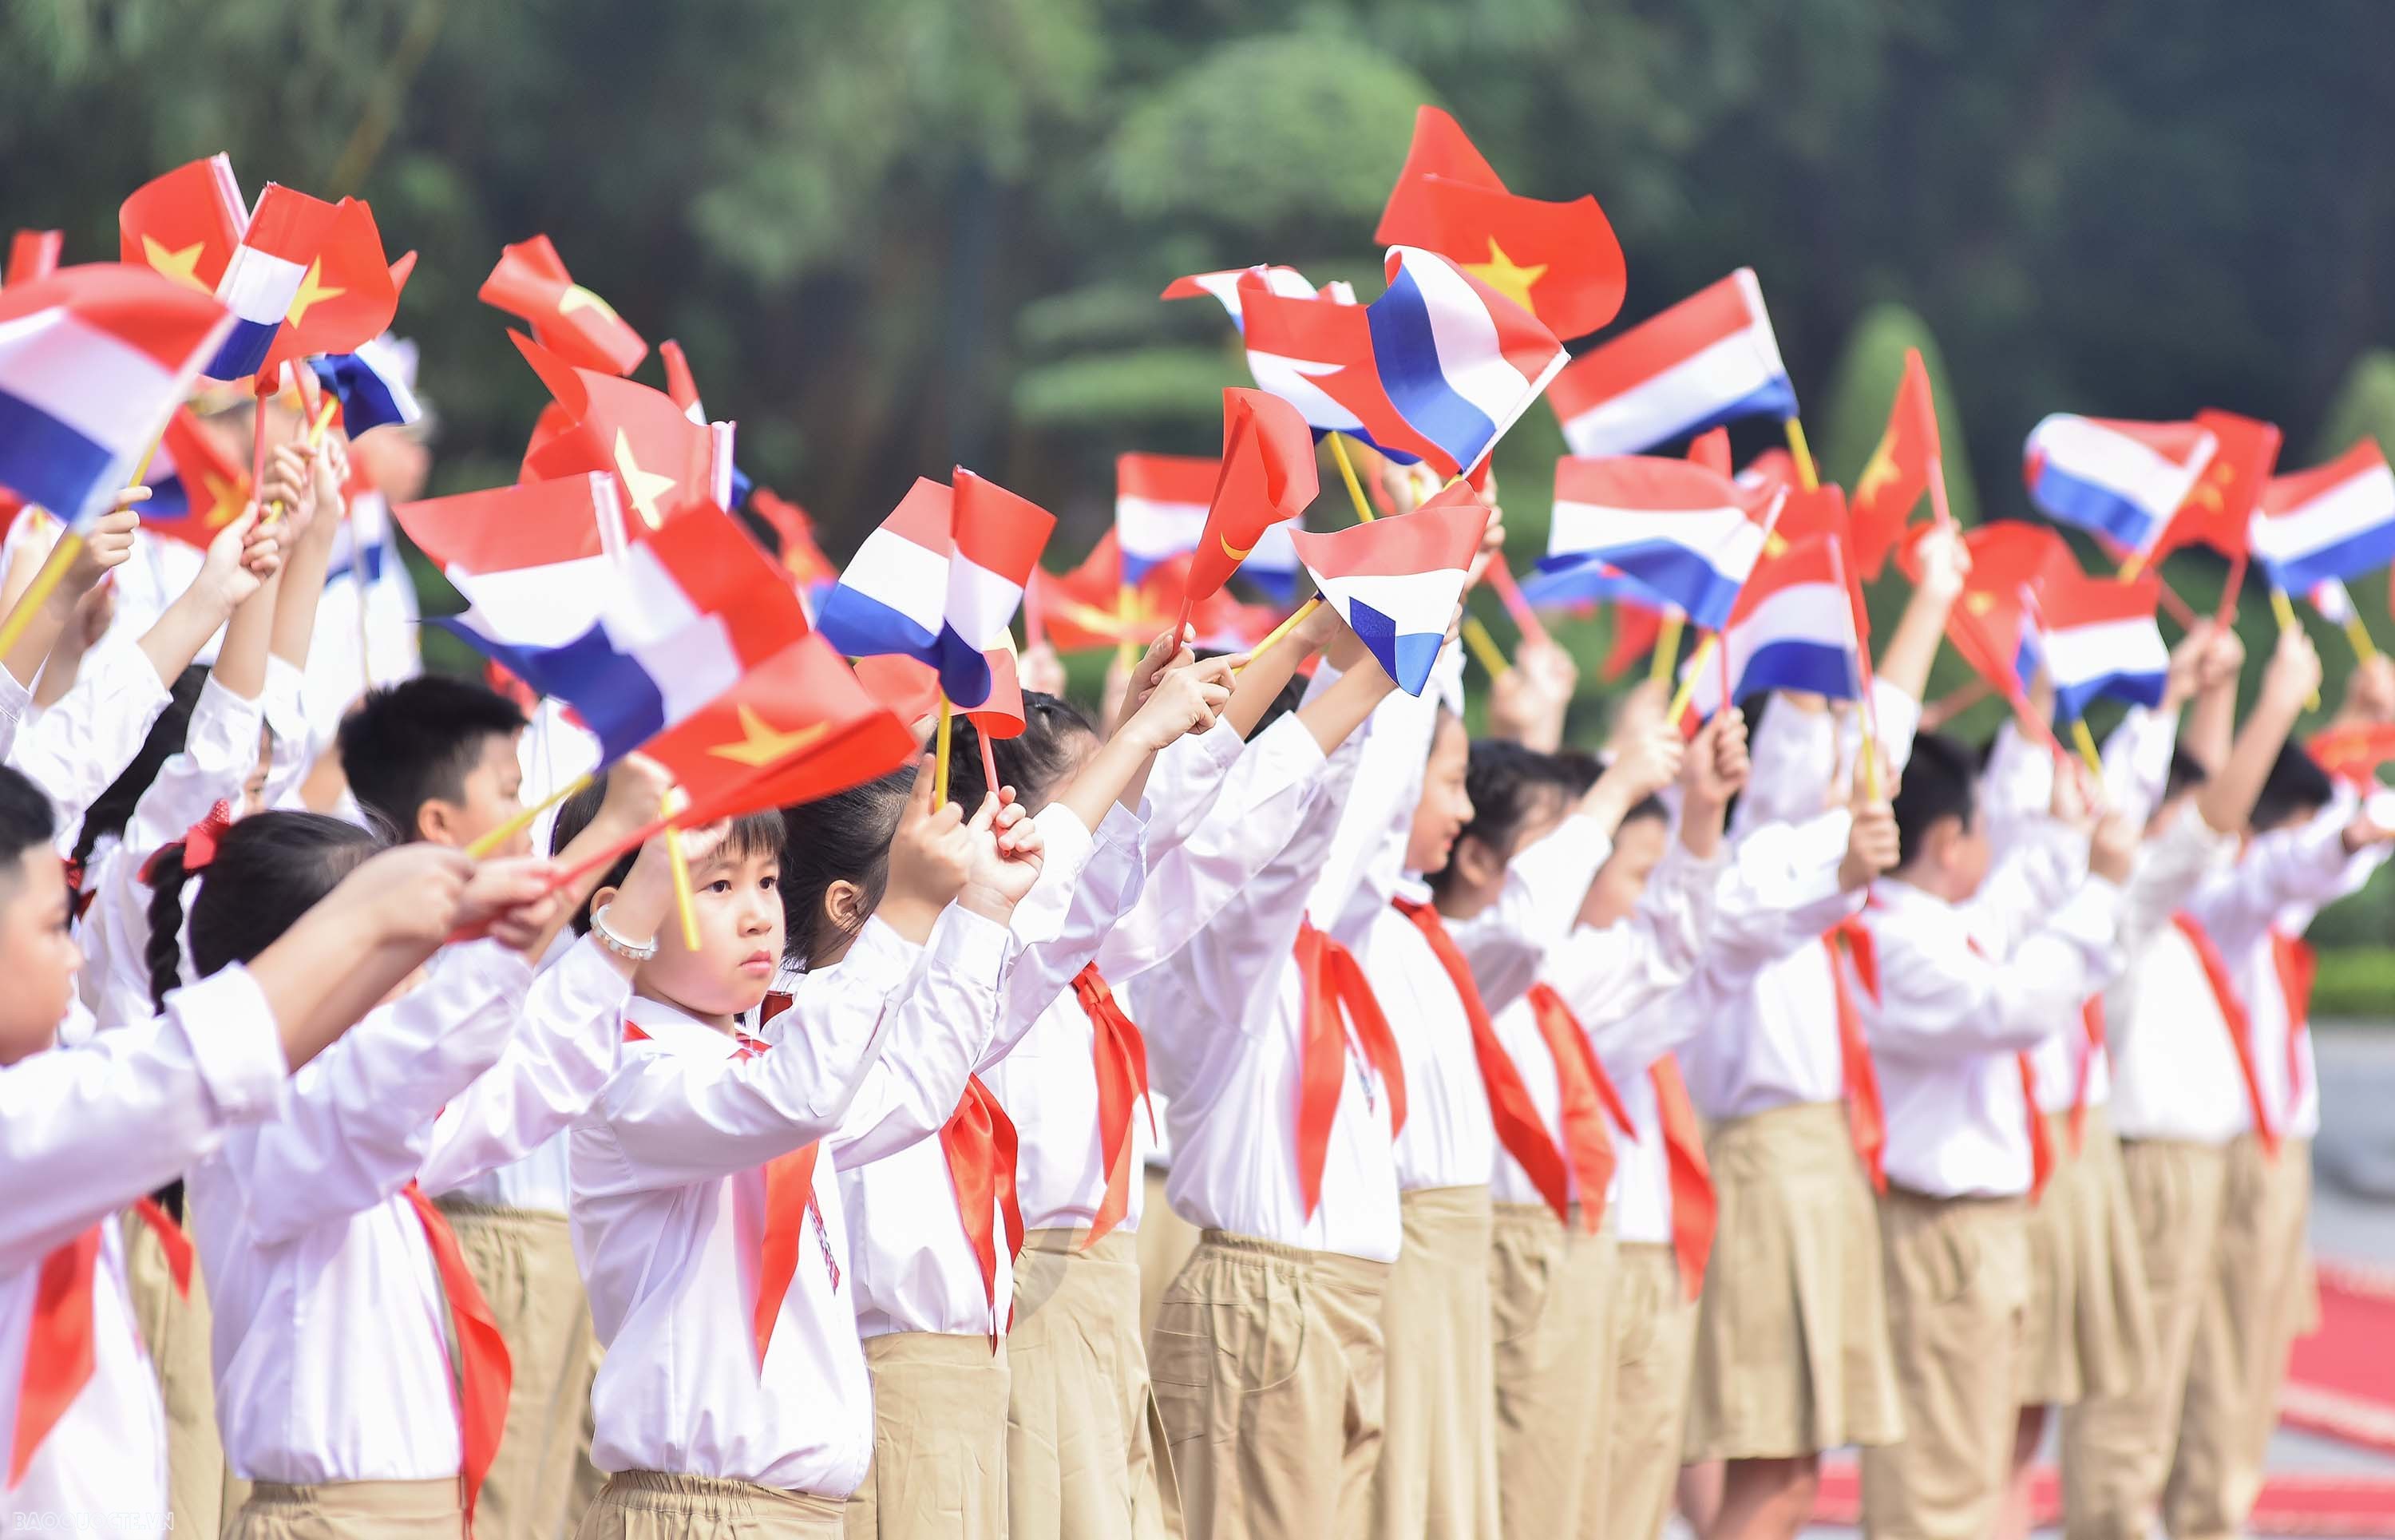 Dutch Prime Minister's visit to Vietnam: A puzzle piece for a complete circle